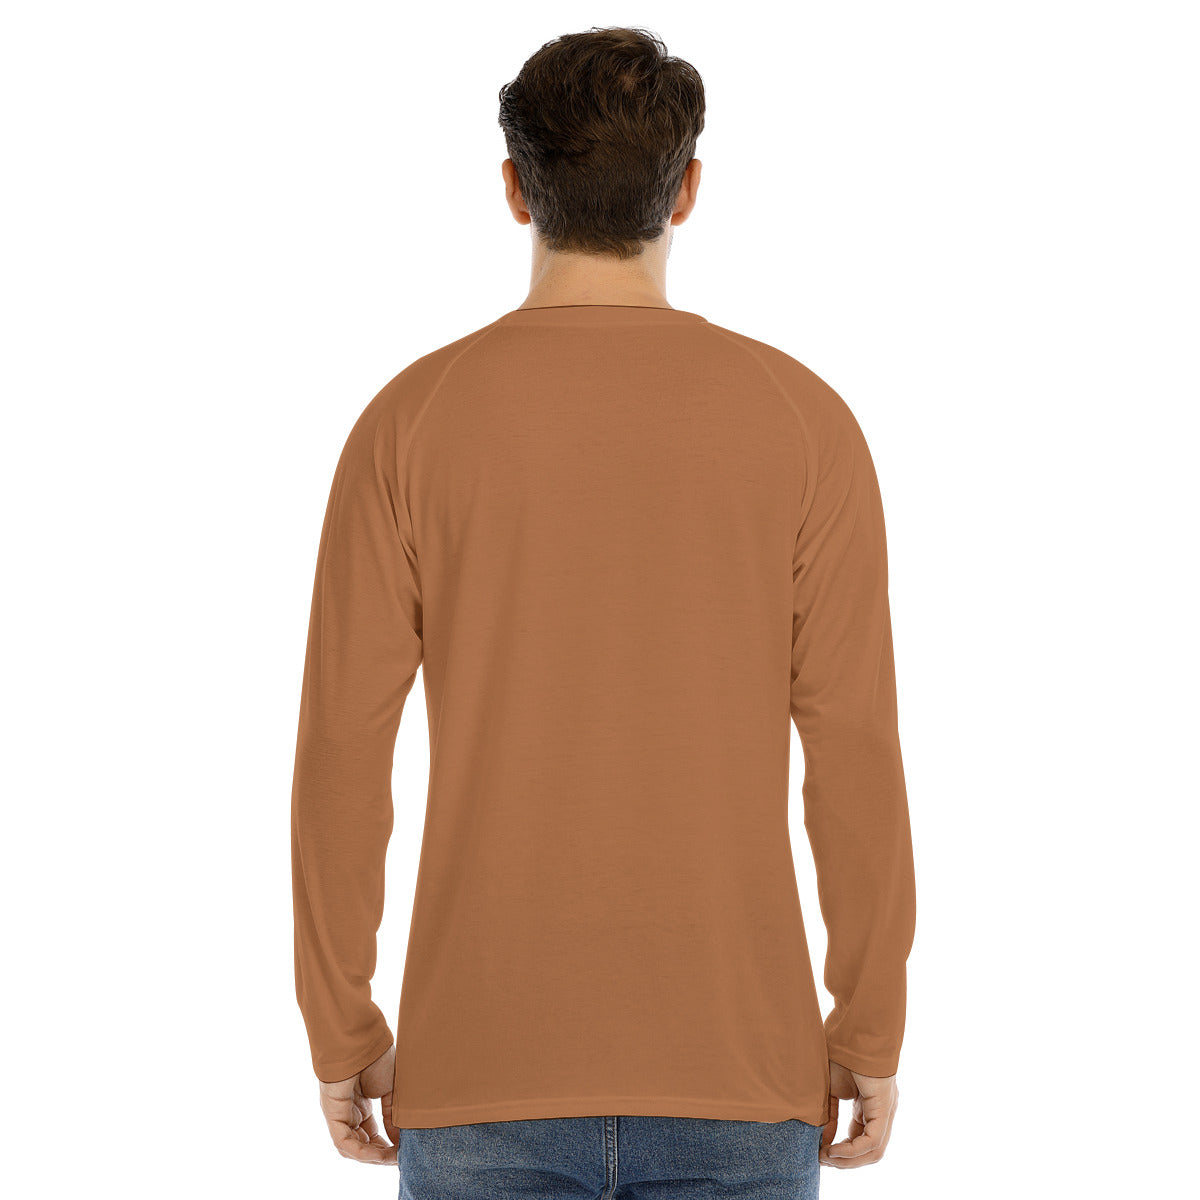 Camino Real 102 -- Men's Long Sleeve T-shirt With Raglan Sleeve